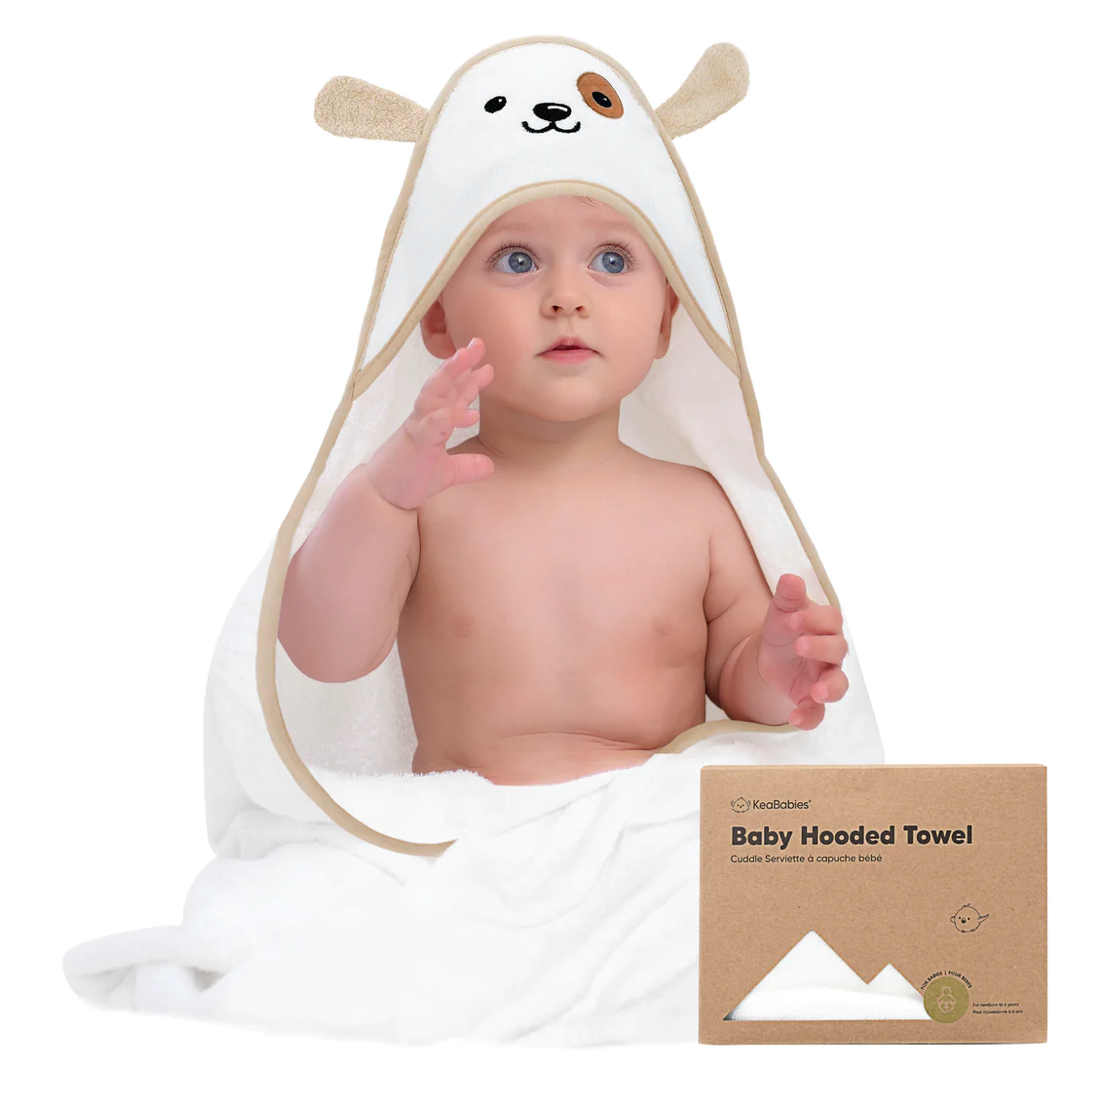 Cuddle Organic Bamboo Baby Hooded Towel